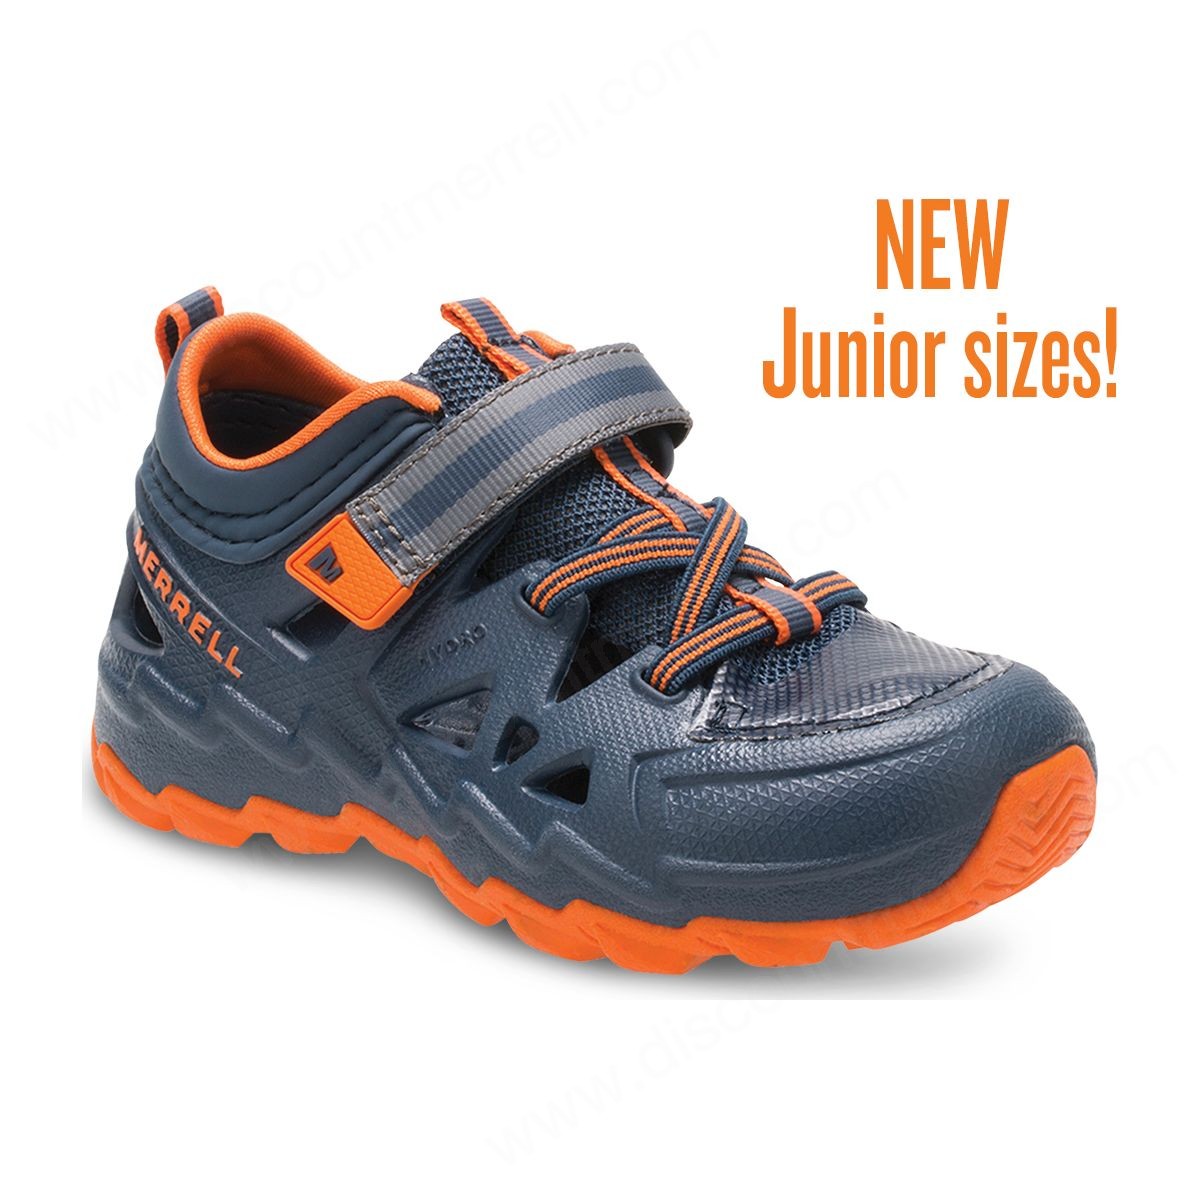 Merrell Little Kid's Hydro Junior . Sneakers Sandal Navy/orange - Merrell Little Kid's Hydro Junior . Sneakers Sandal Navy/orange